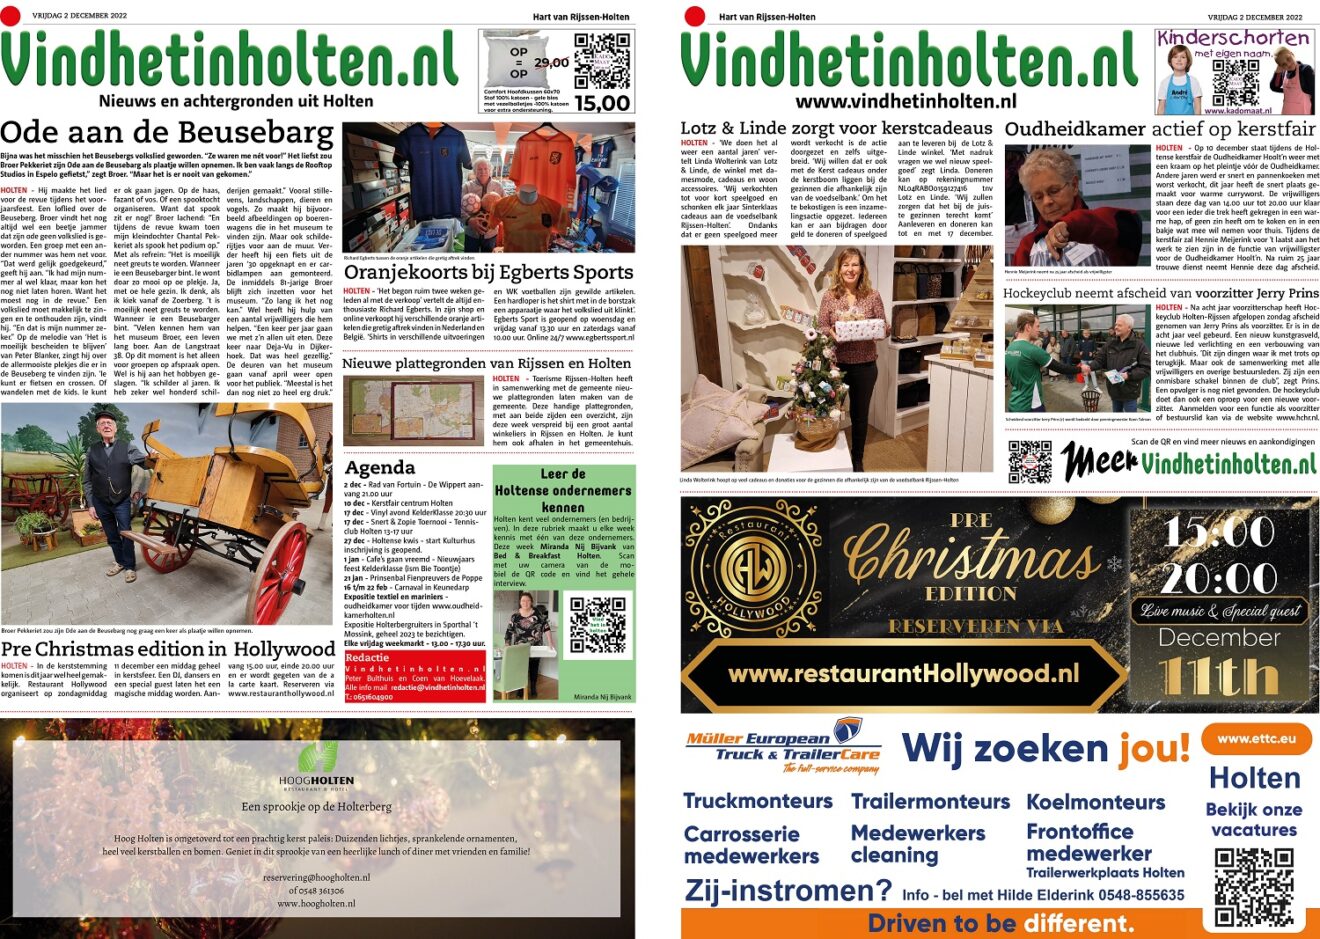 Vindhetholtenpagina editie 2 december 2022 spread website